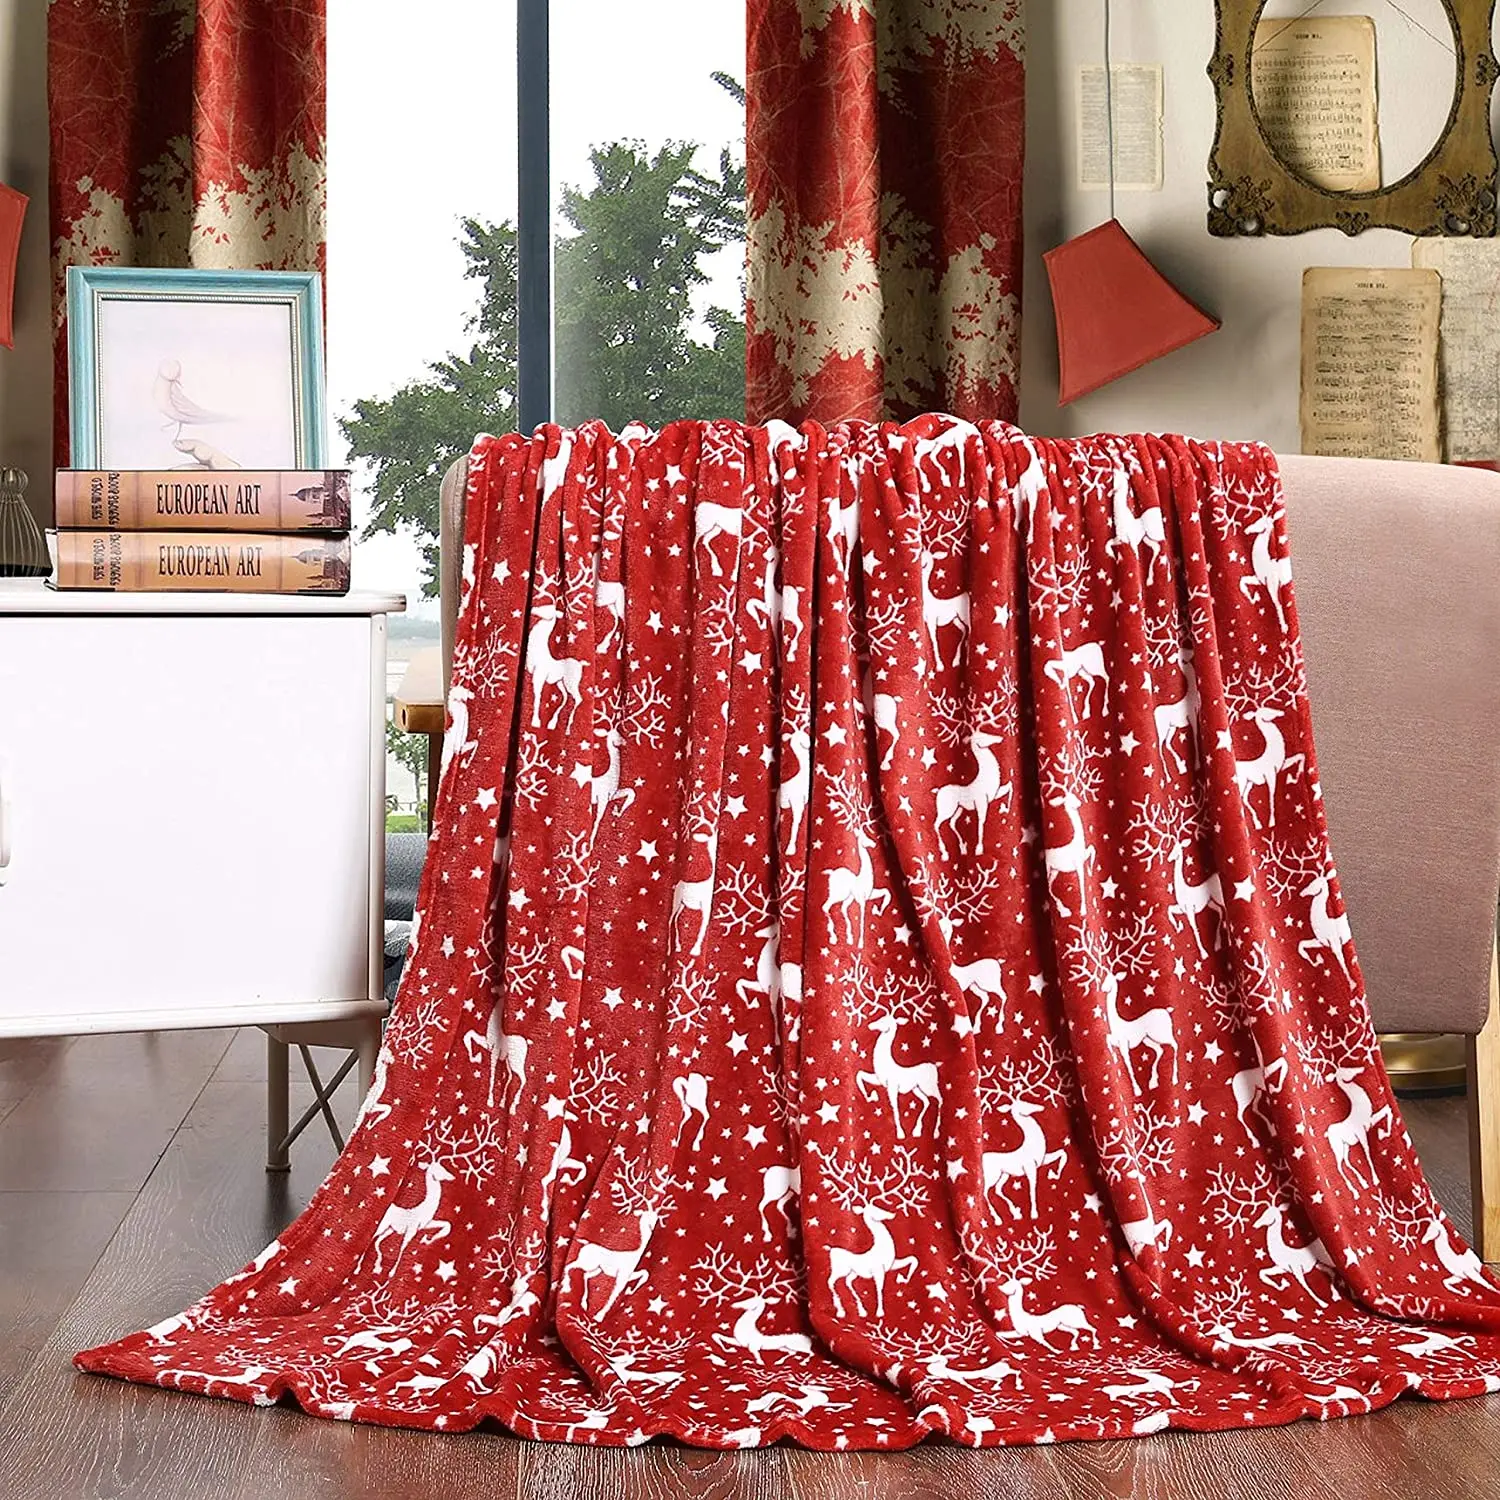 

Comfort Velvet Touch Ultra Plush Christmas Holiday Printed Fleece Throw/Blanket-50 x 60inch, (Reindeer), 50 x 60 inch